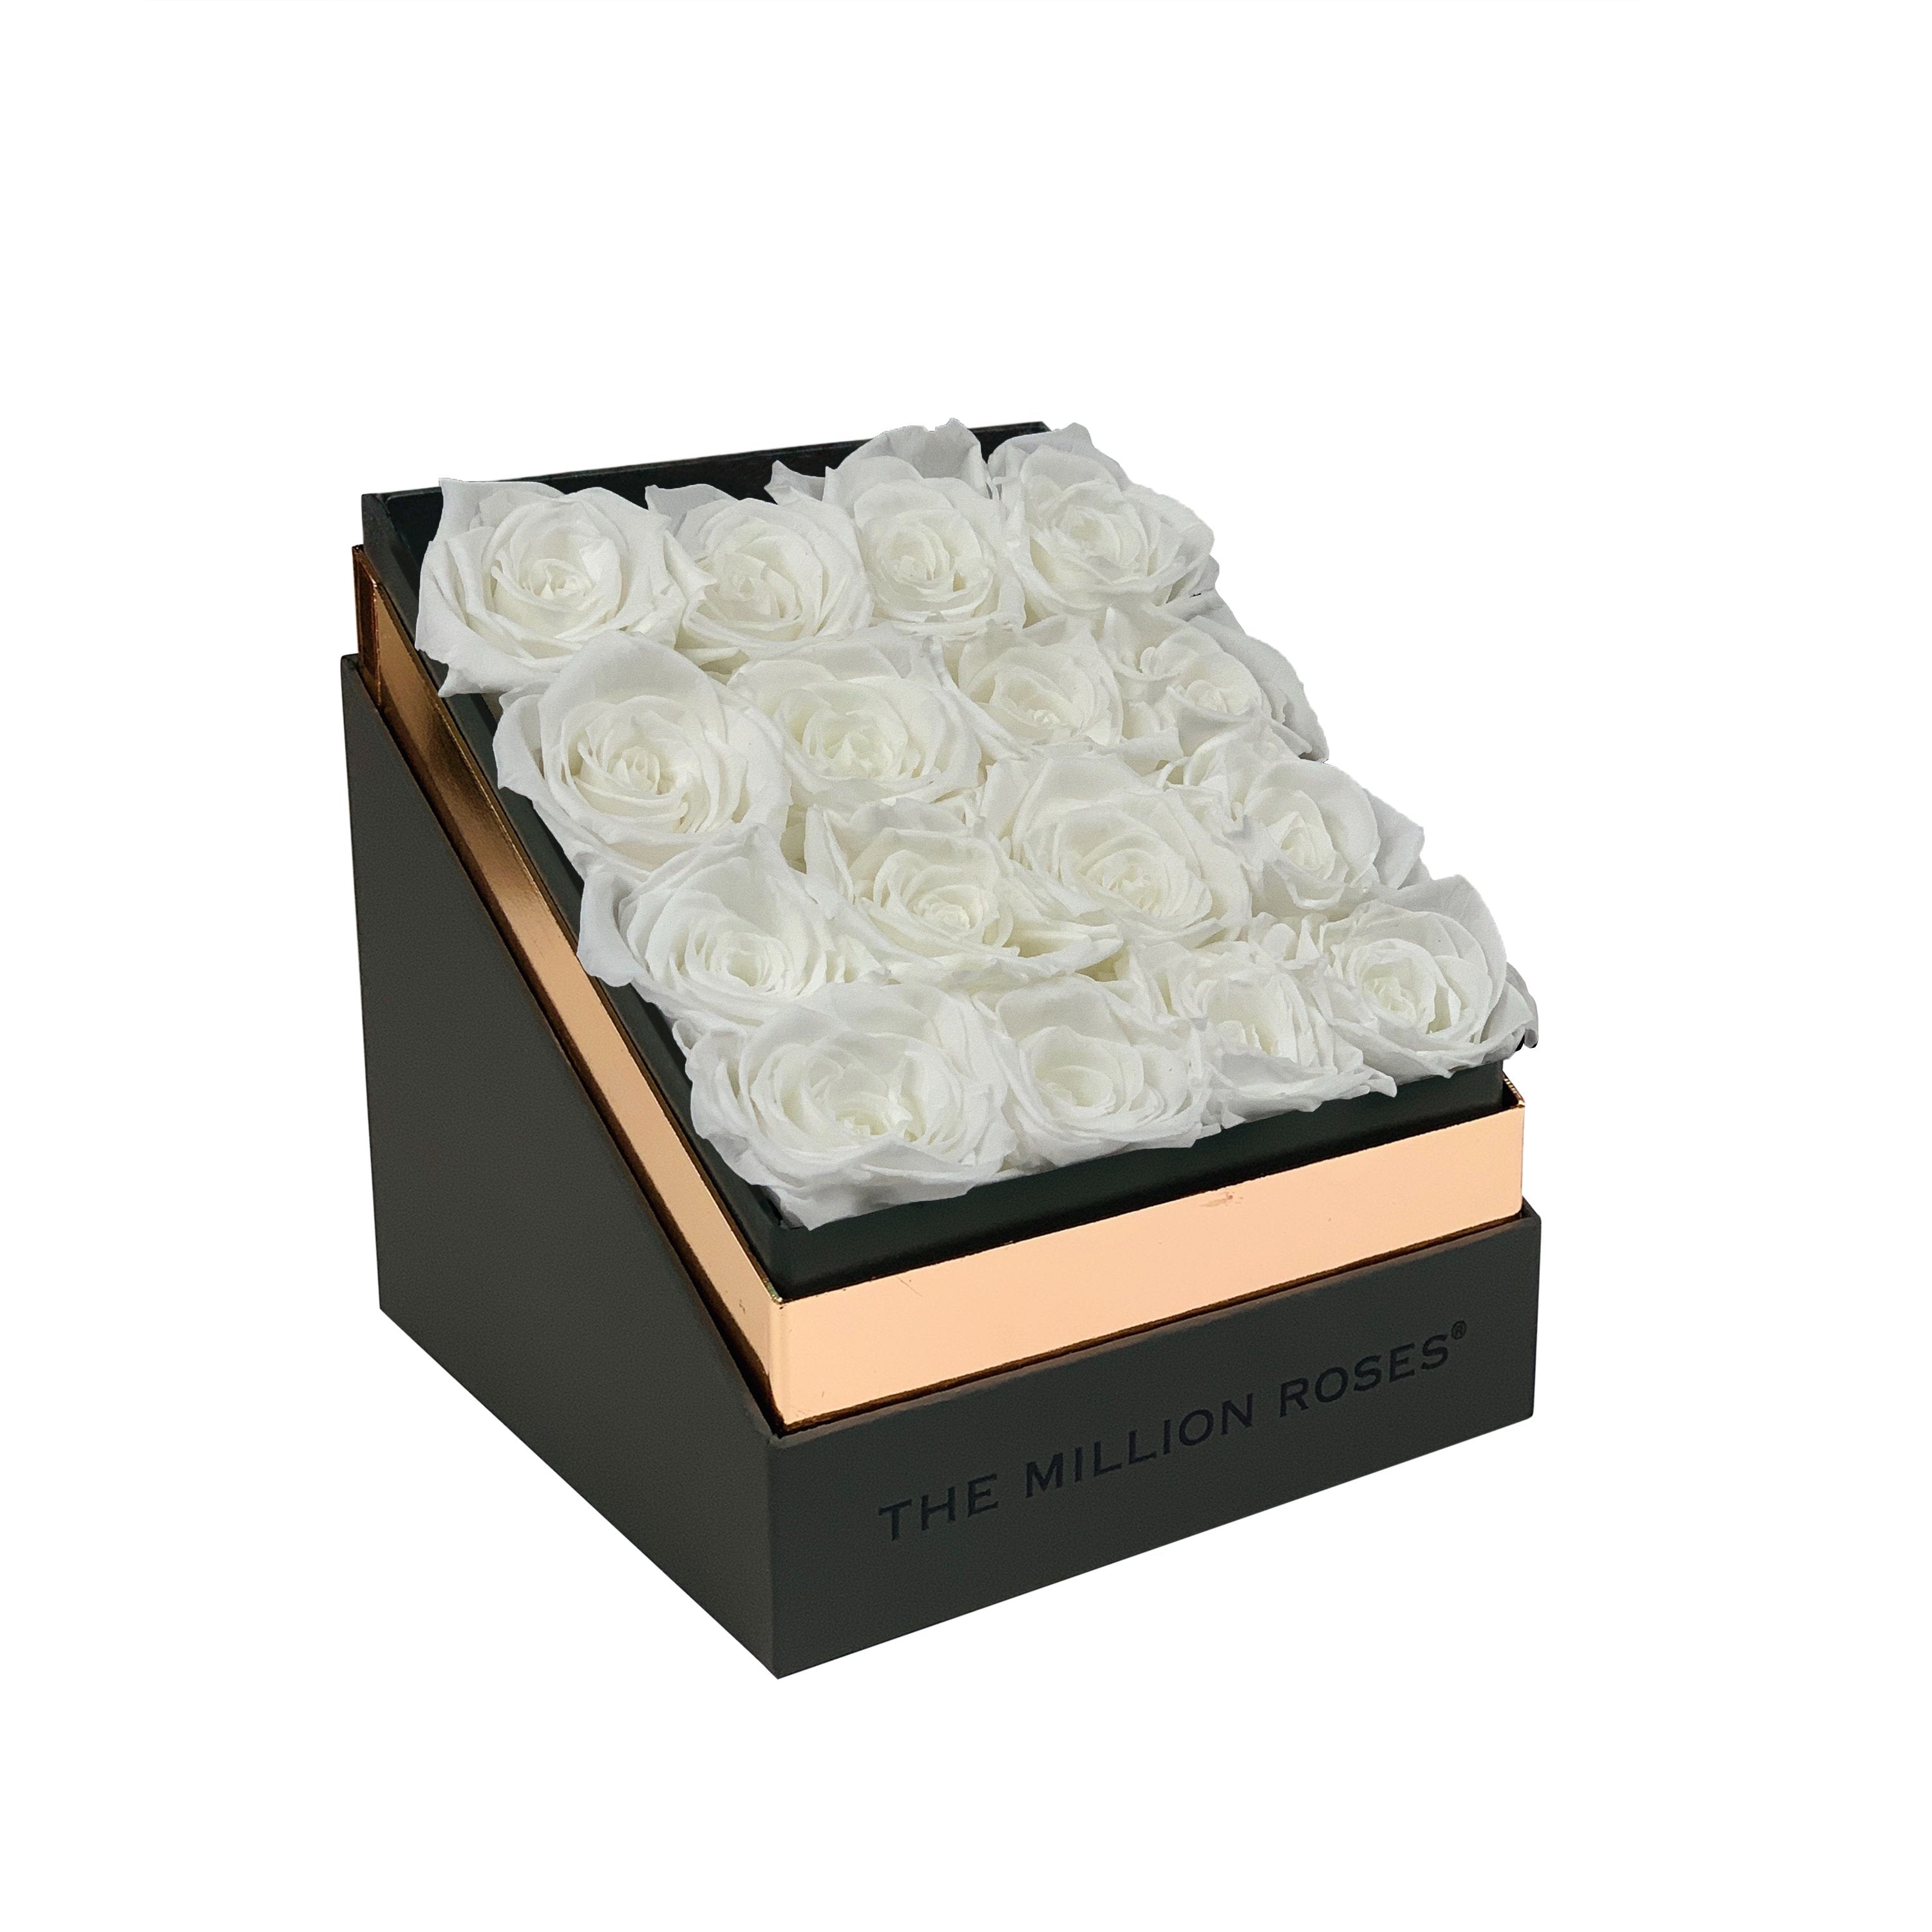 The Square - Gray Box - White Roses